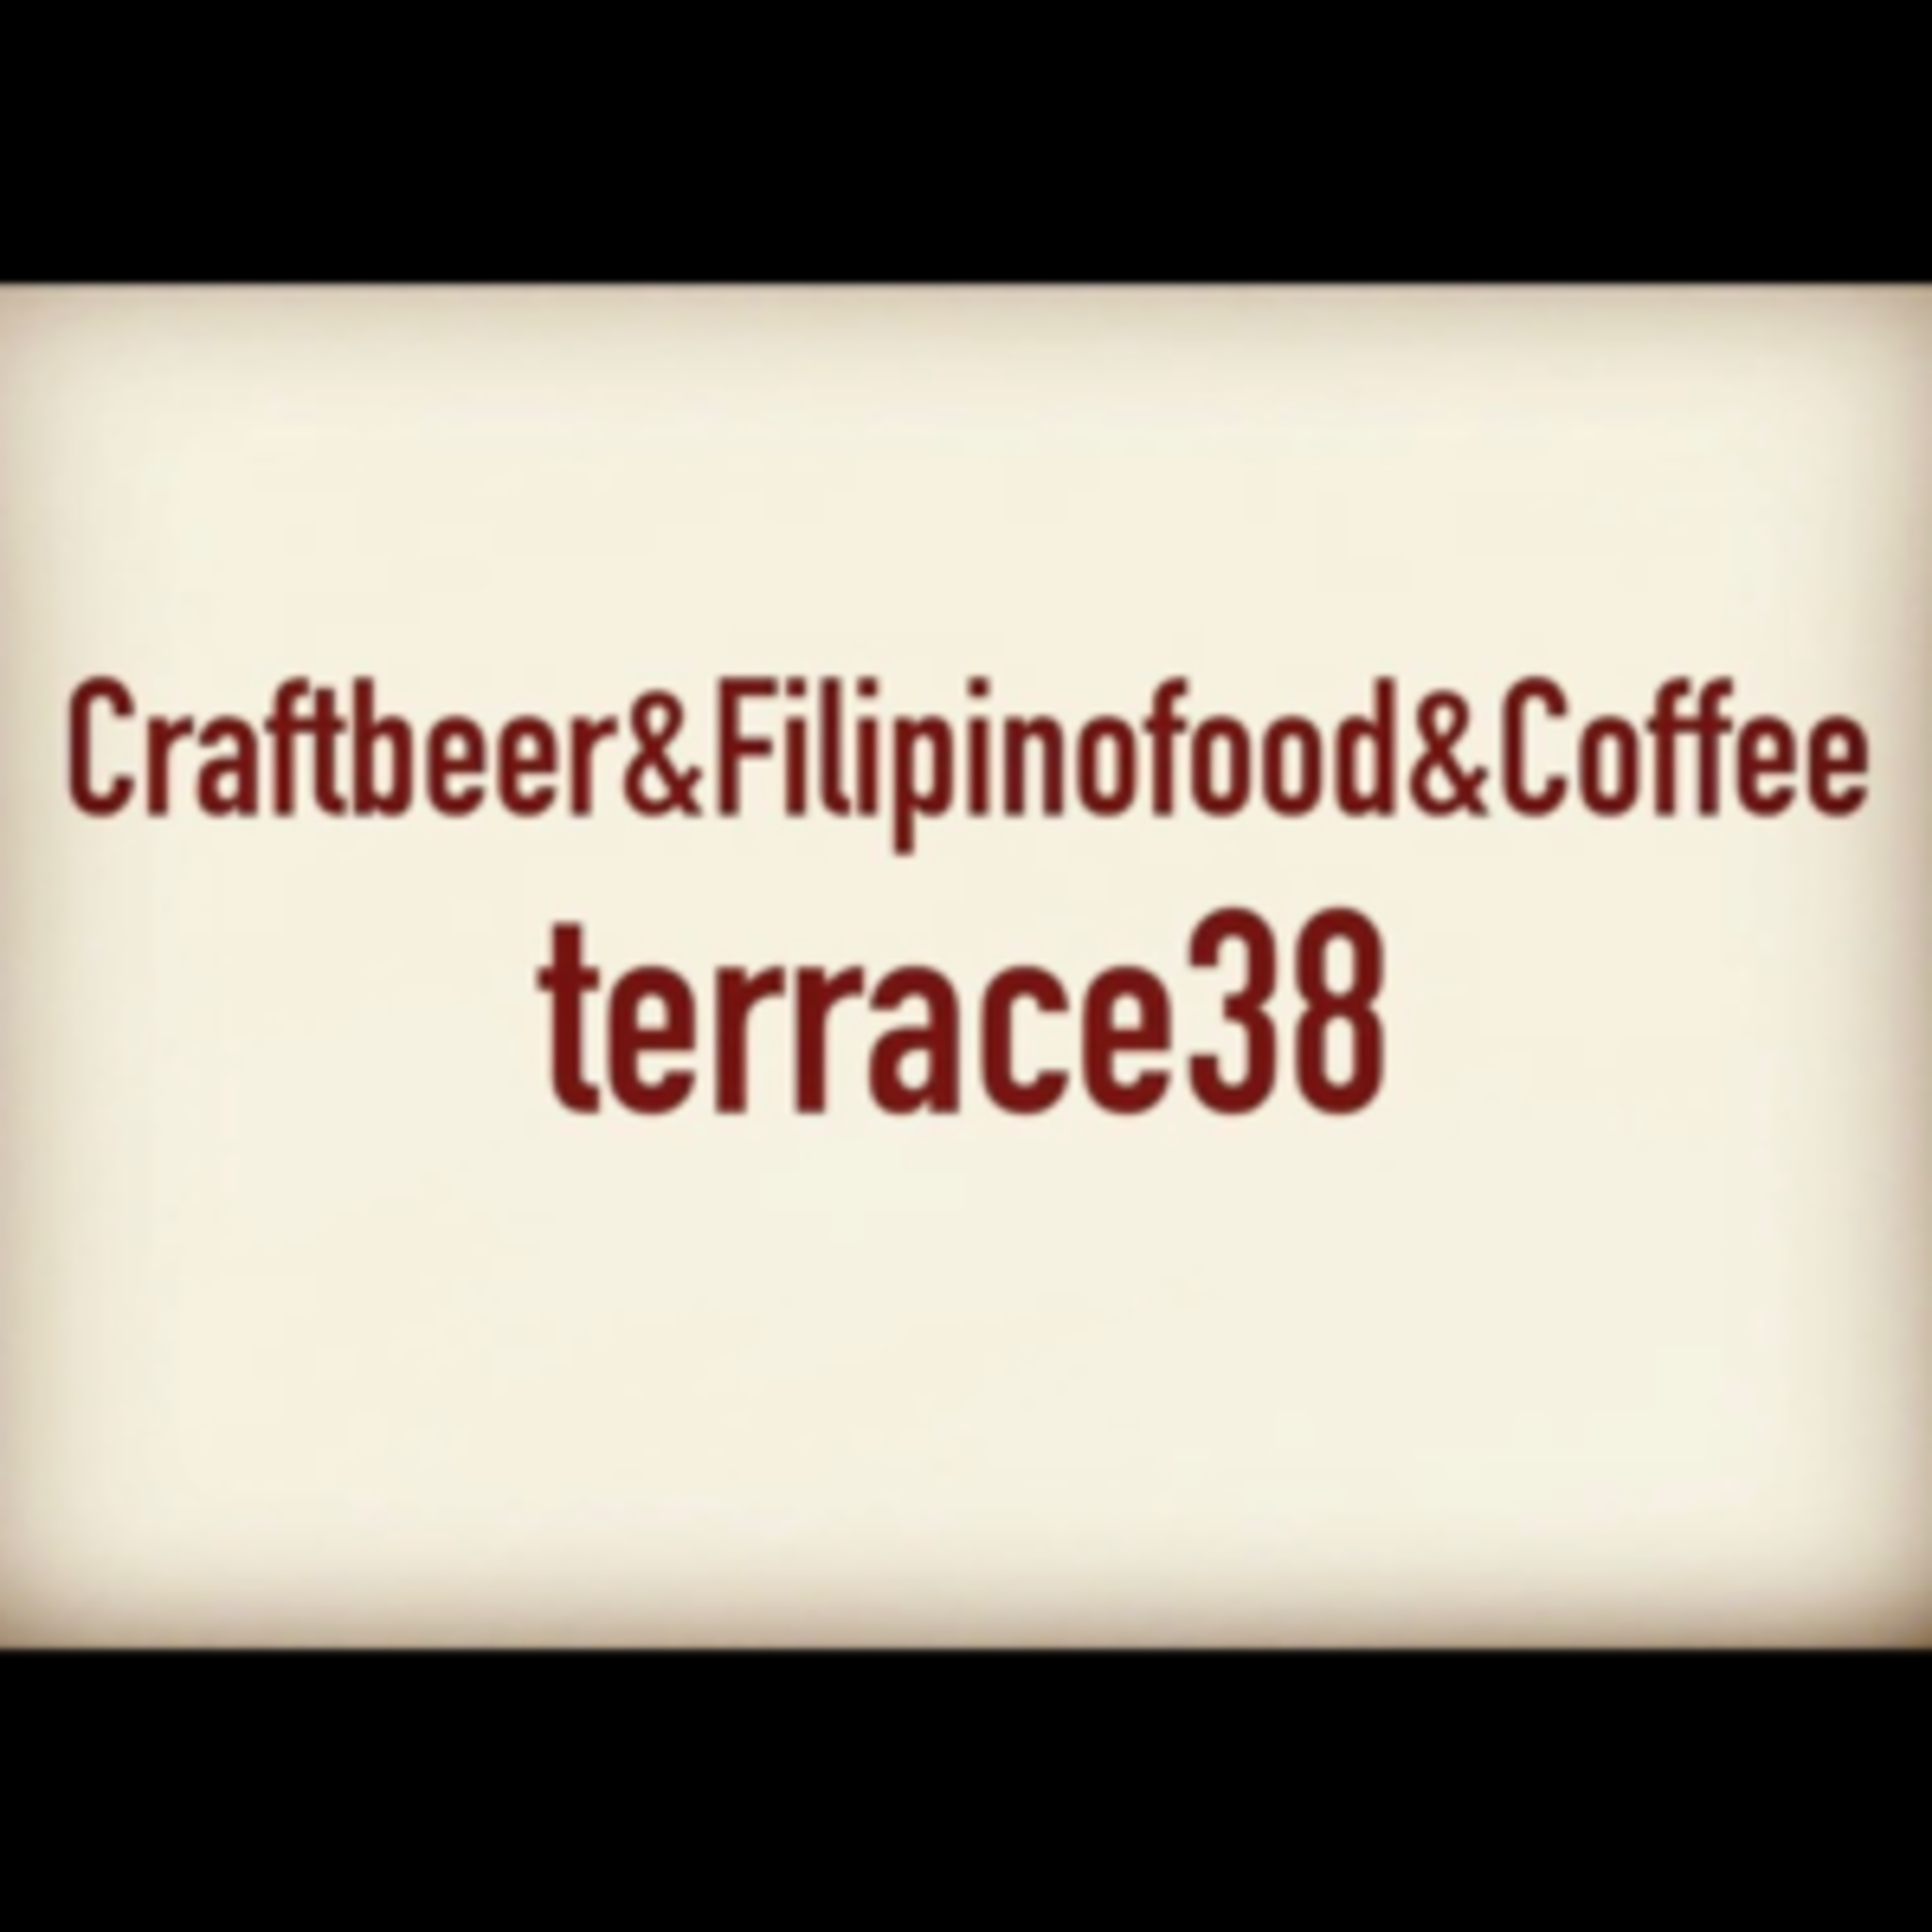 Craftbeer＆Filipinofood＆Coffee terrace38の代表写真4